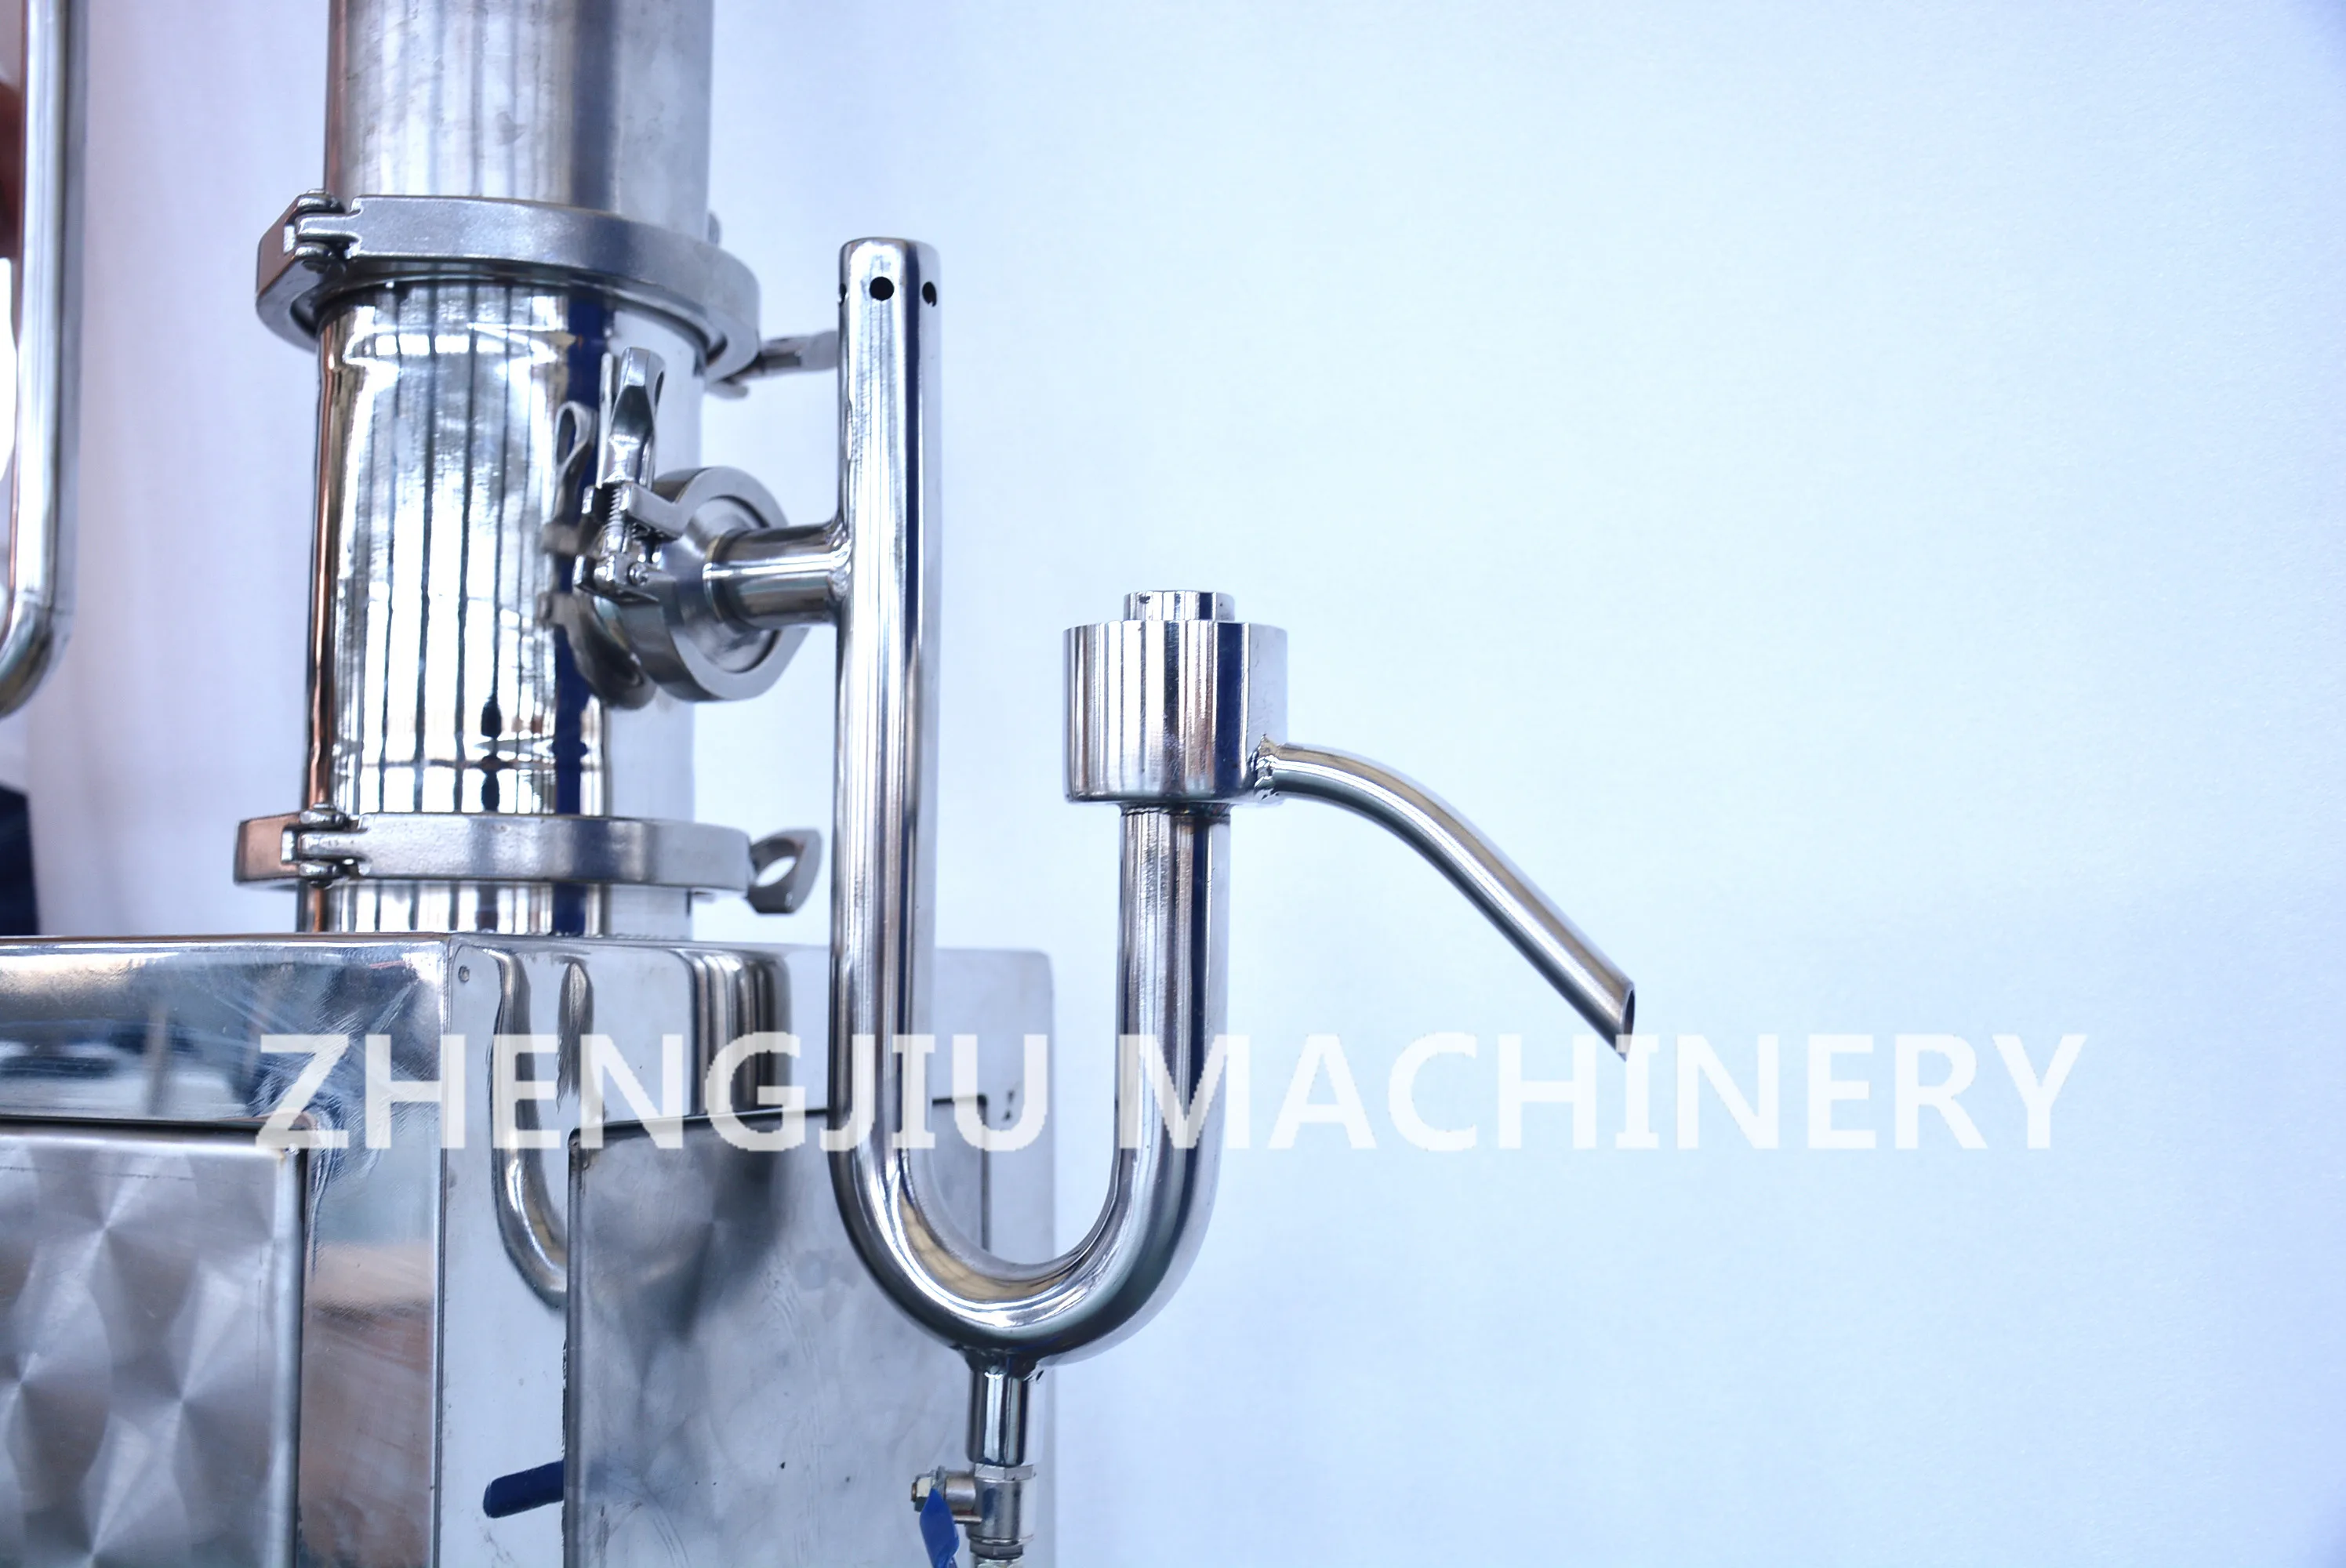 Distillateur pour alcool - LTA series - Zhejiang LeadTop